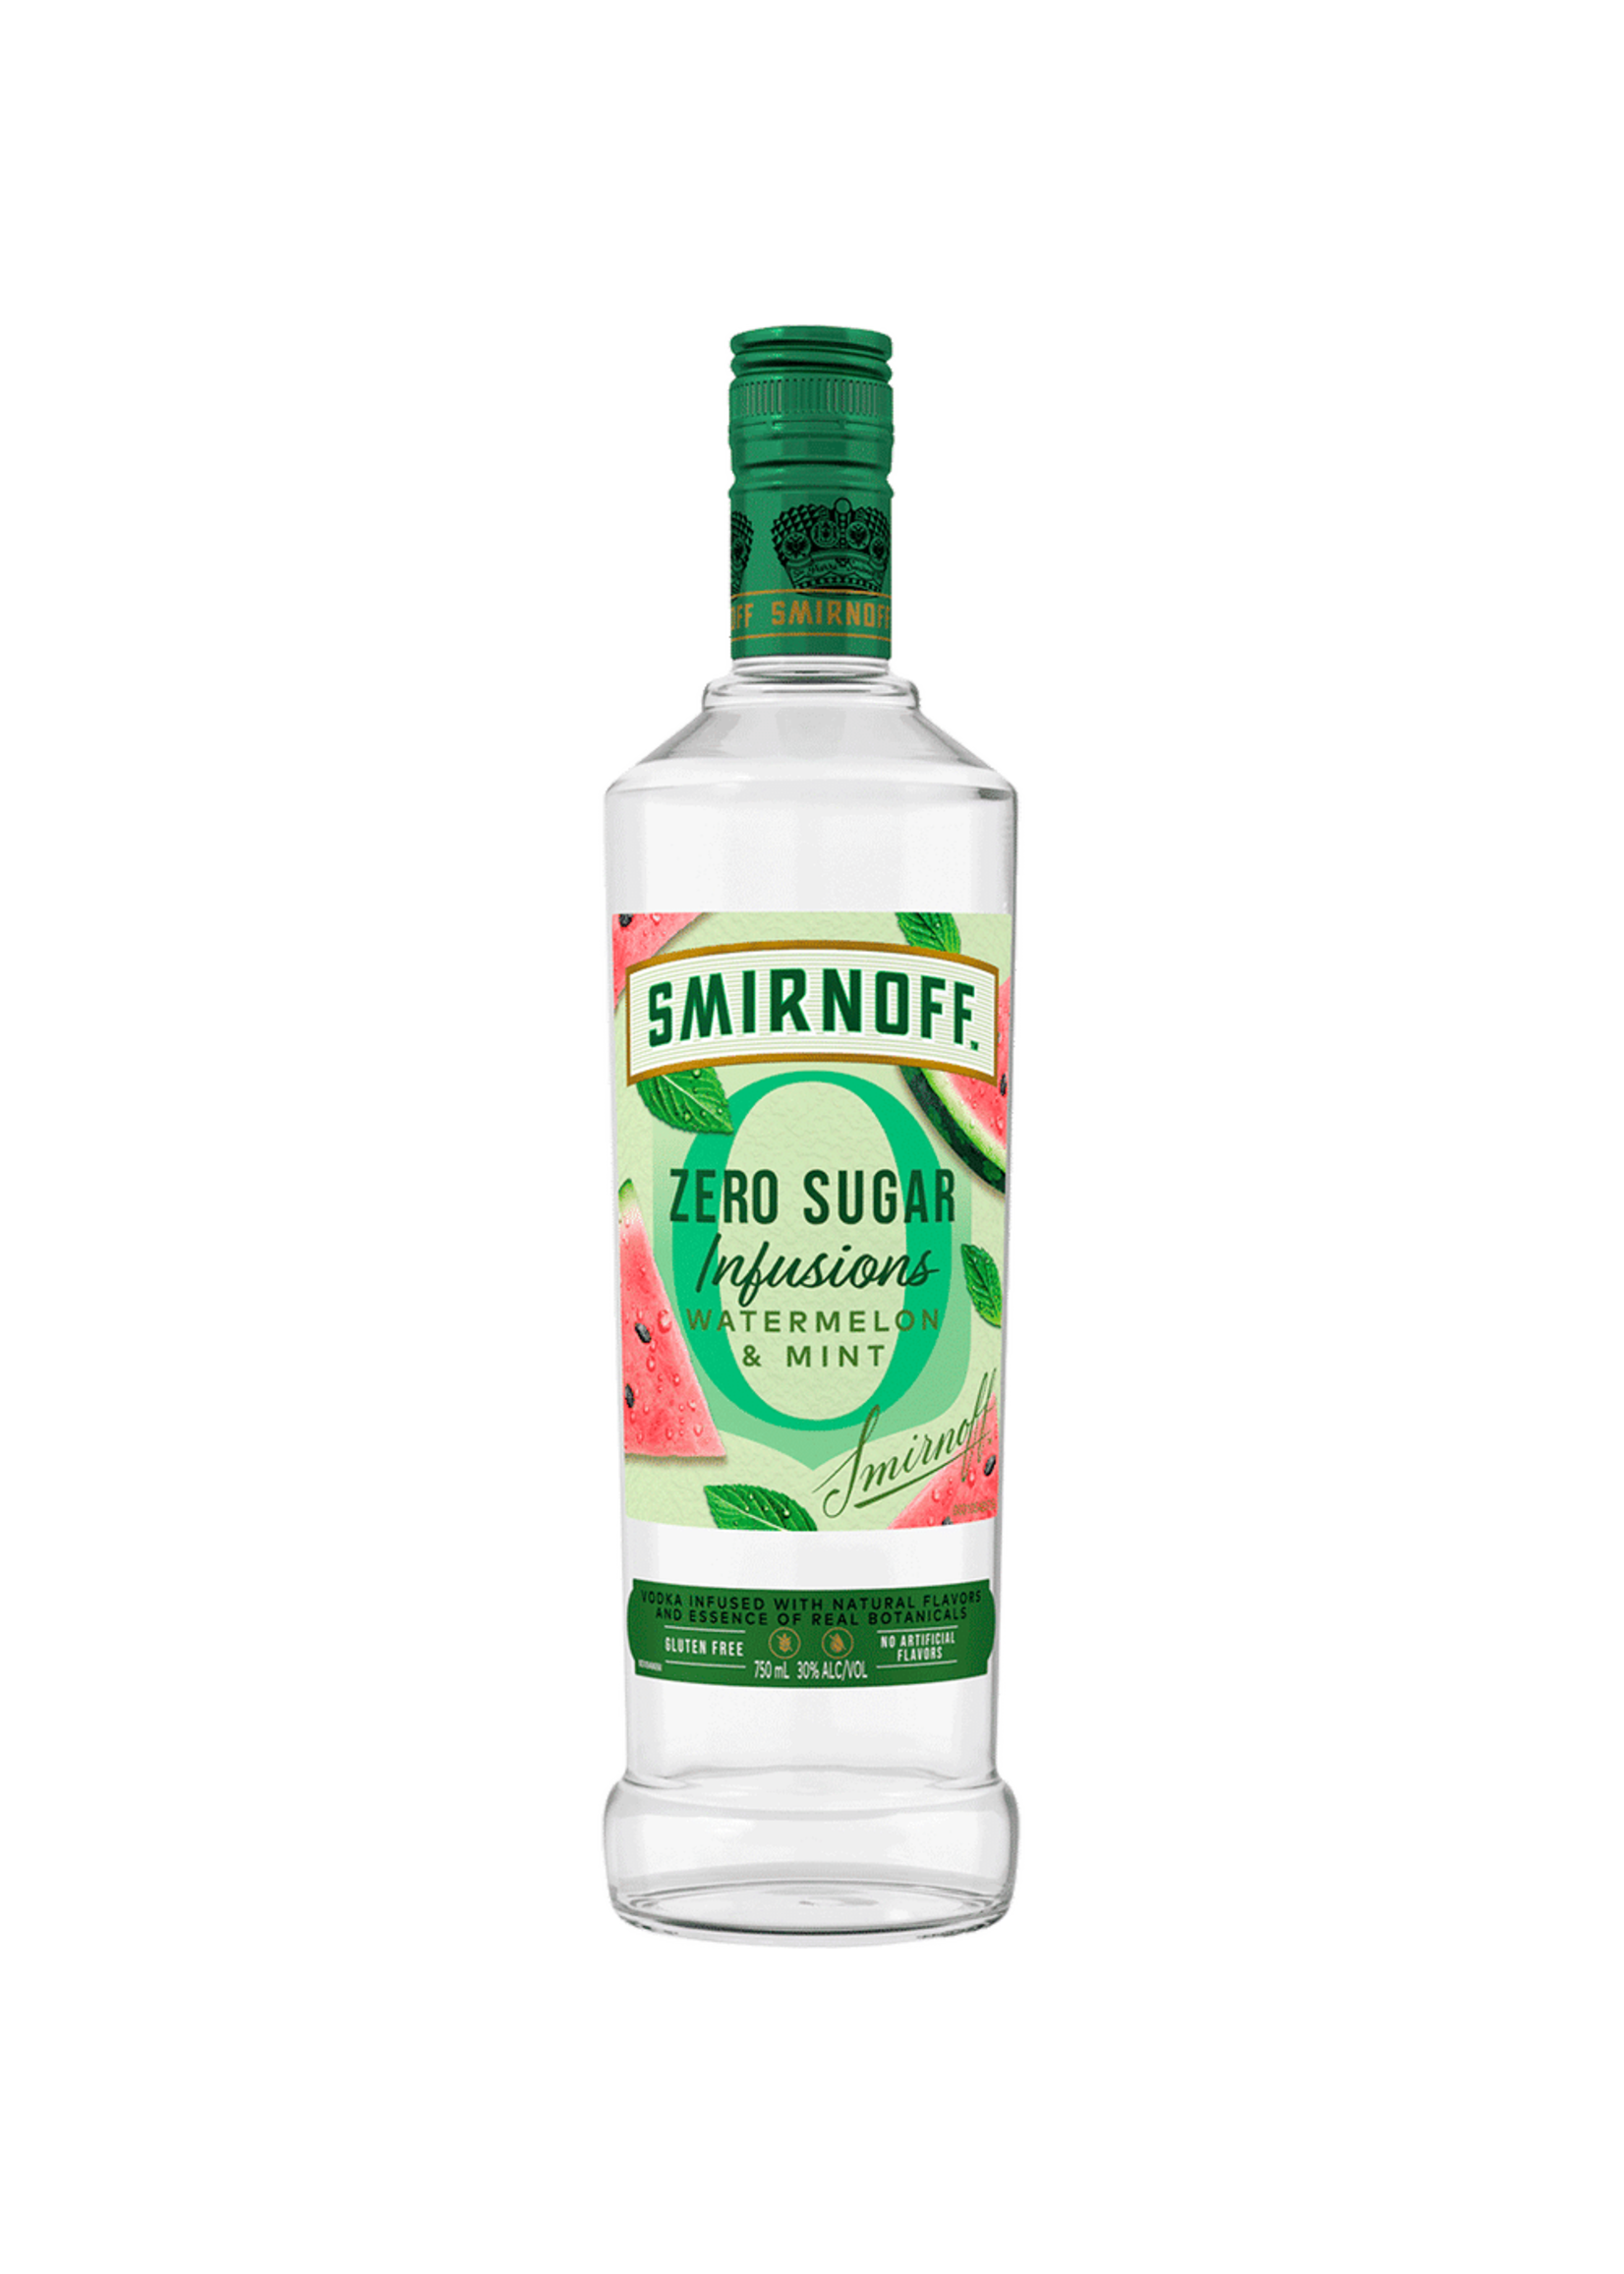 Smirnoff  Vodka Smirnoff Zero Sugar Infusions Watermelon & Mint 60ProoF 750ml